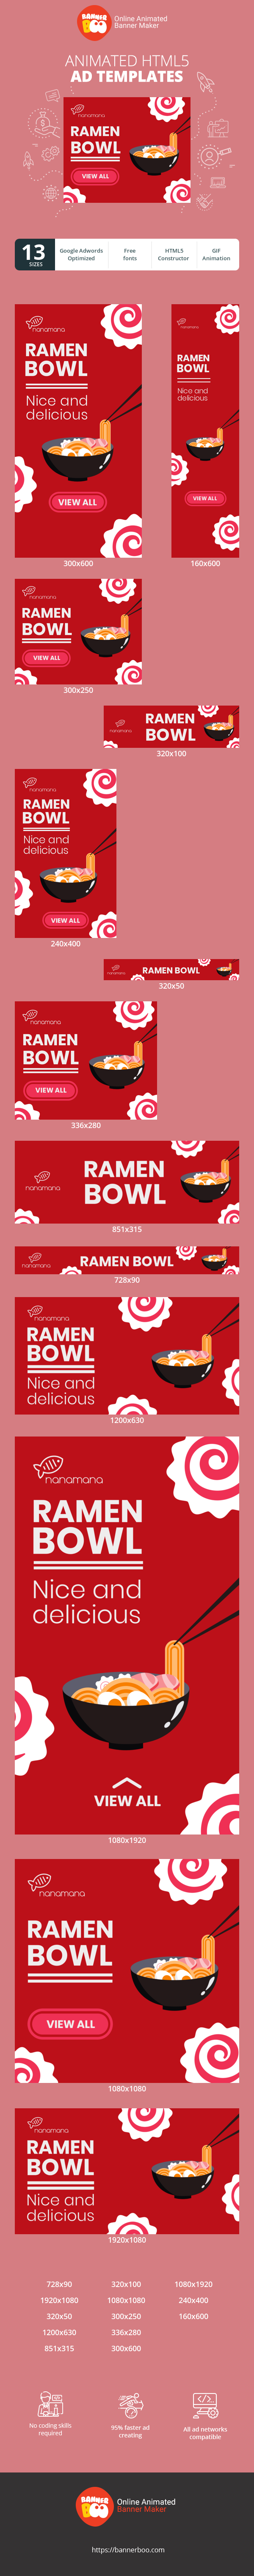 Шаблон рекламного банера — Ramen Bowl — Nice And Delicious